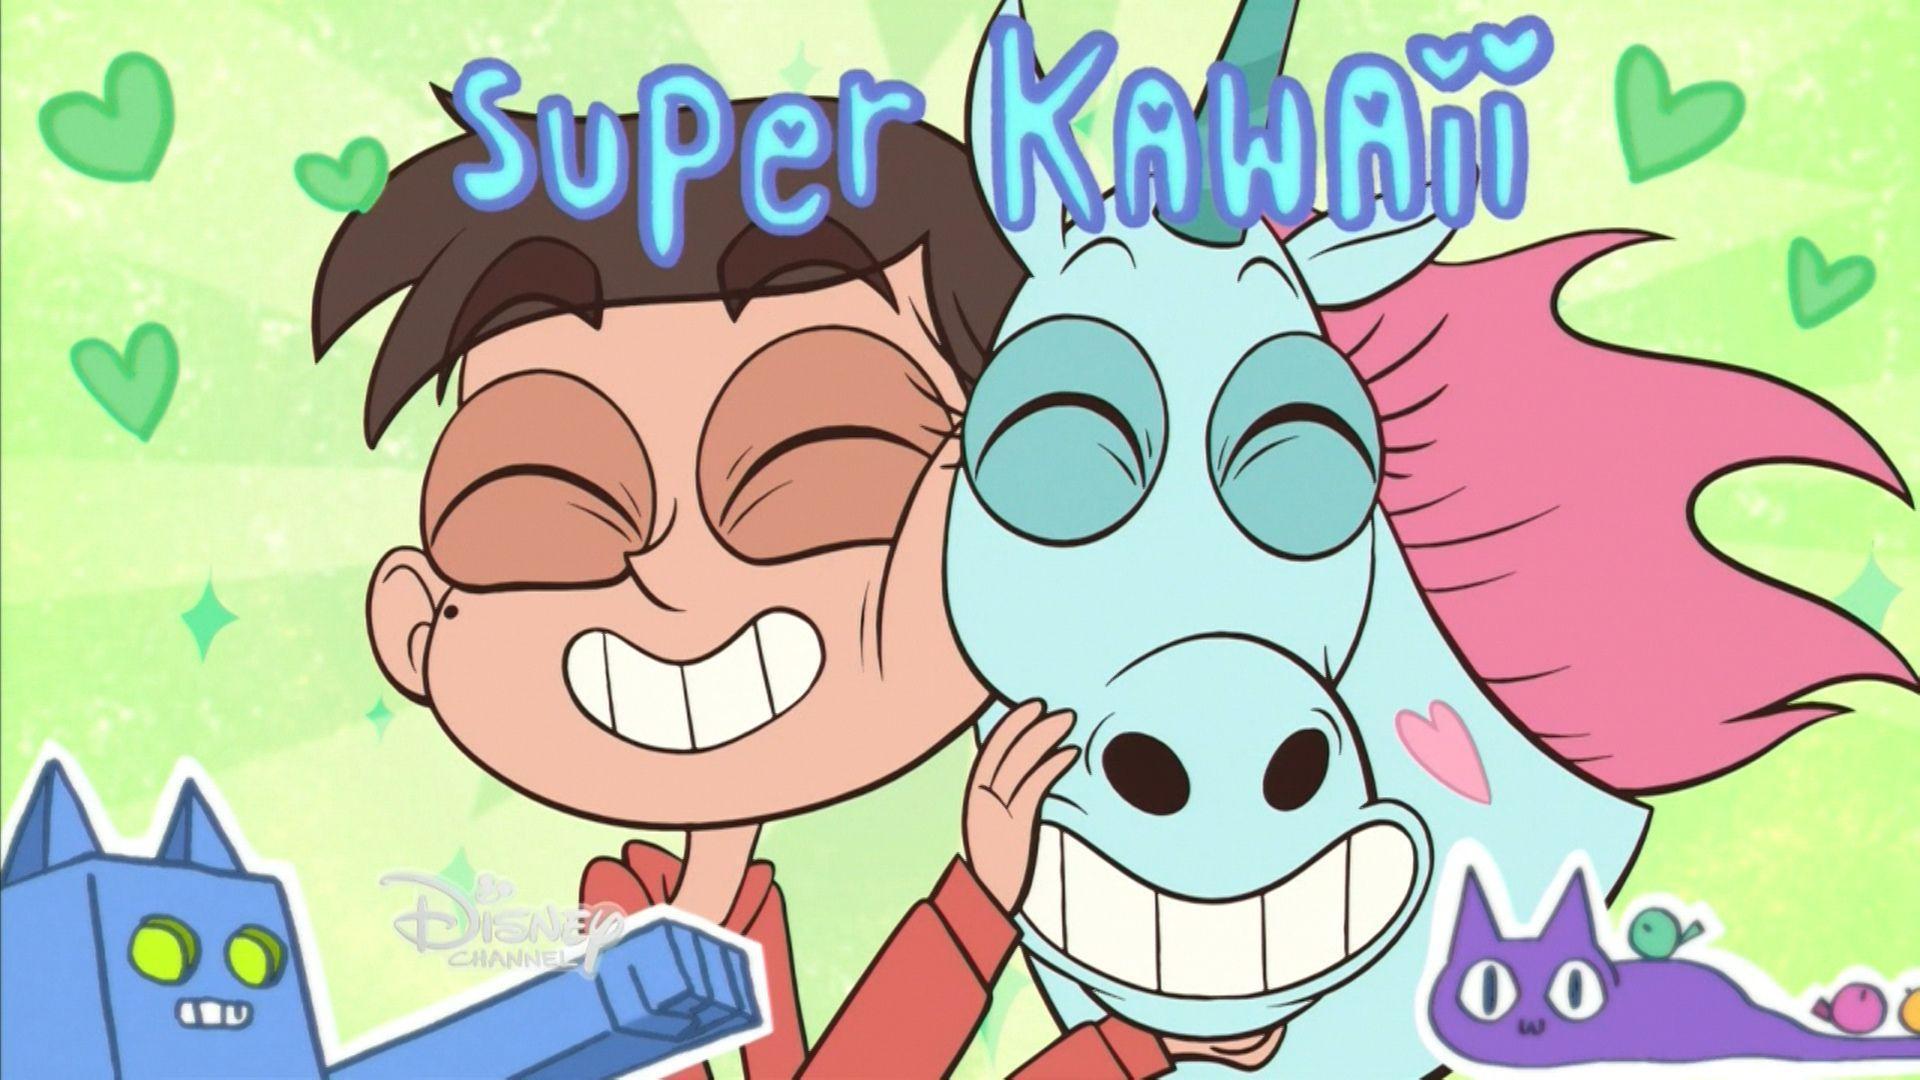 Super Kawaii